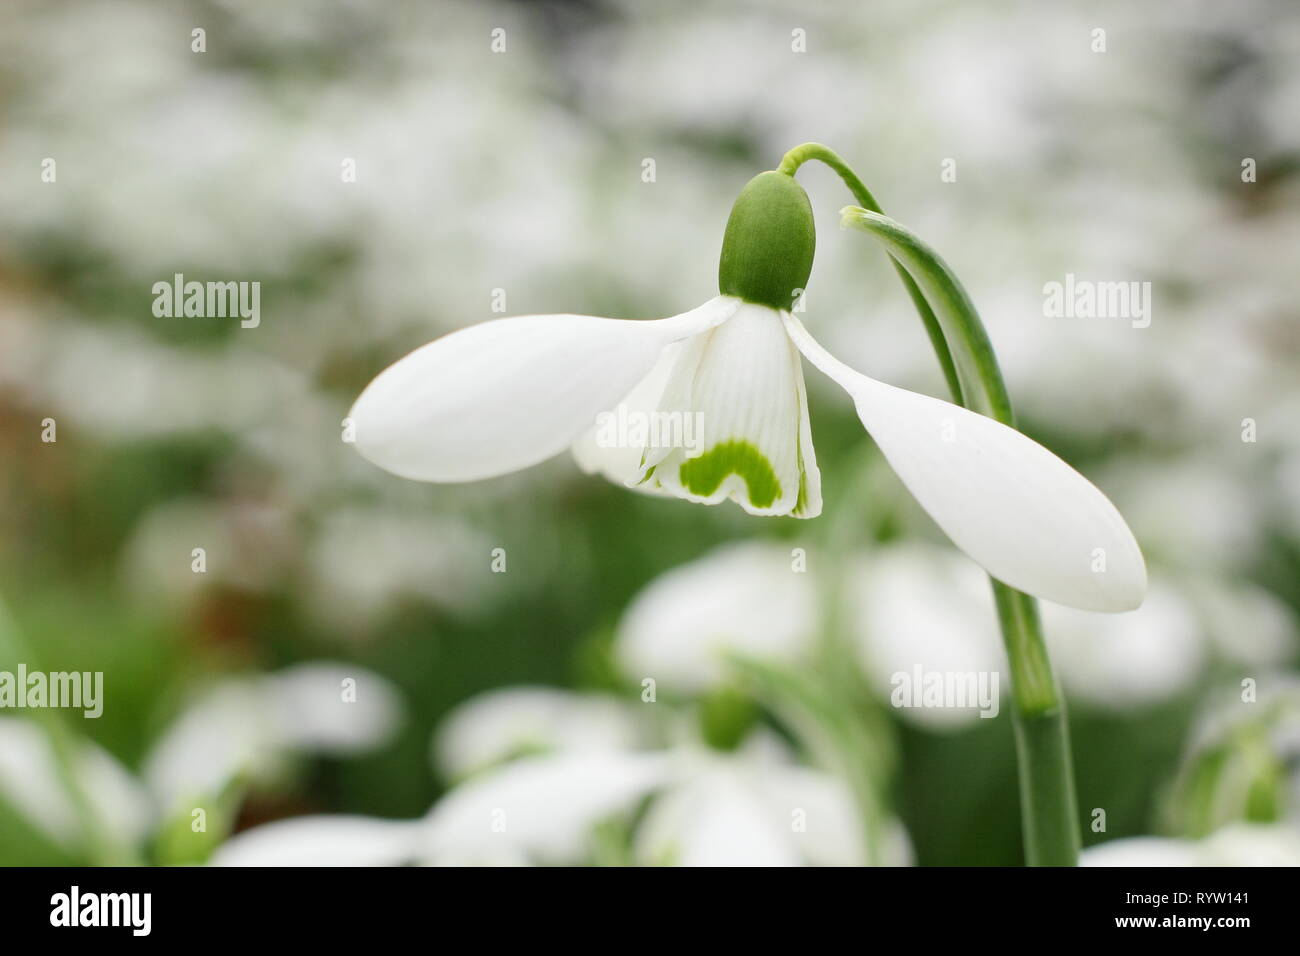 Galanthus 'S. Arnott'. Fiore profumato di Galanthus nivalis 'Sam Arnott' snowdrop in febbraio, UK giardino. Foto Stock